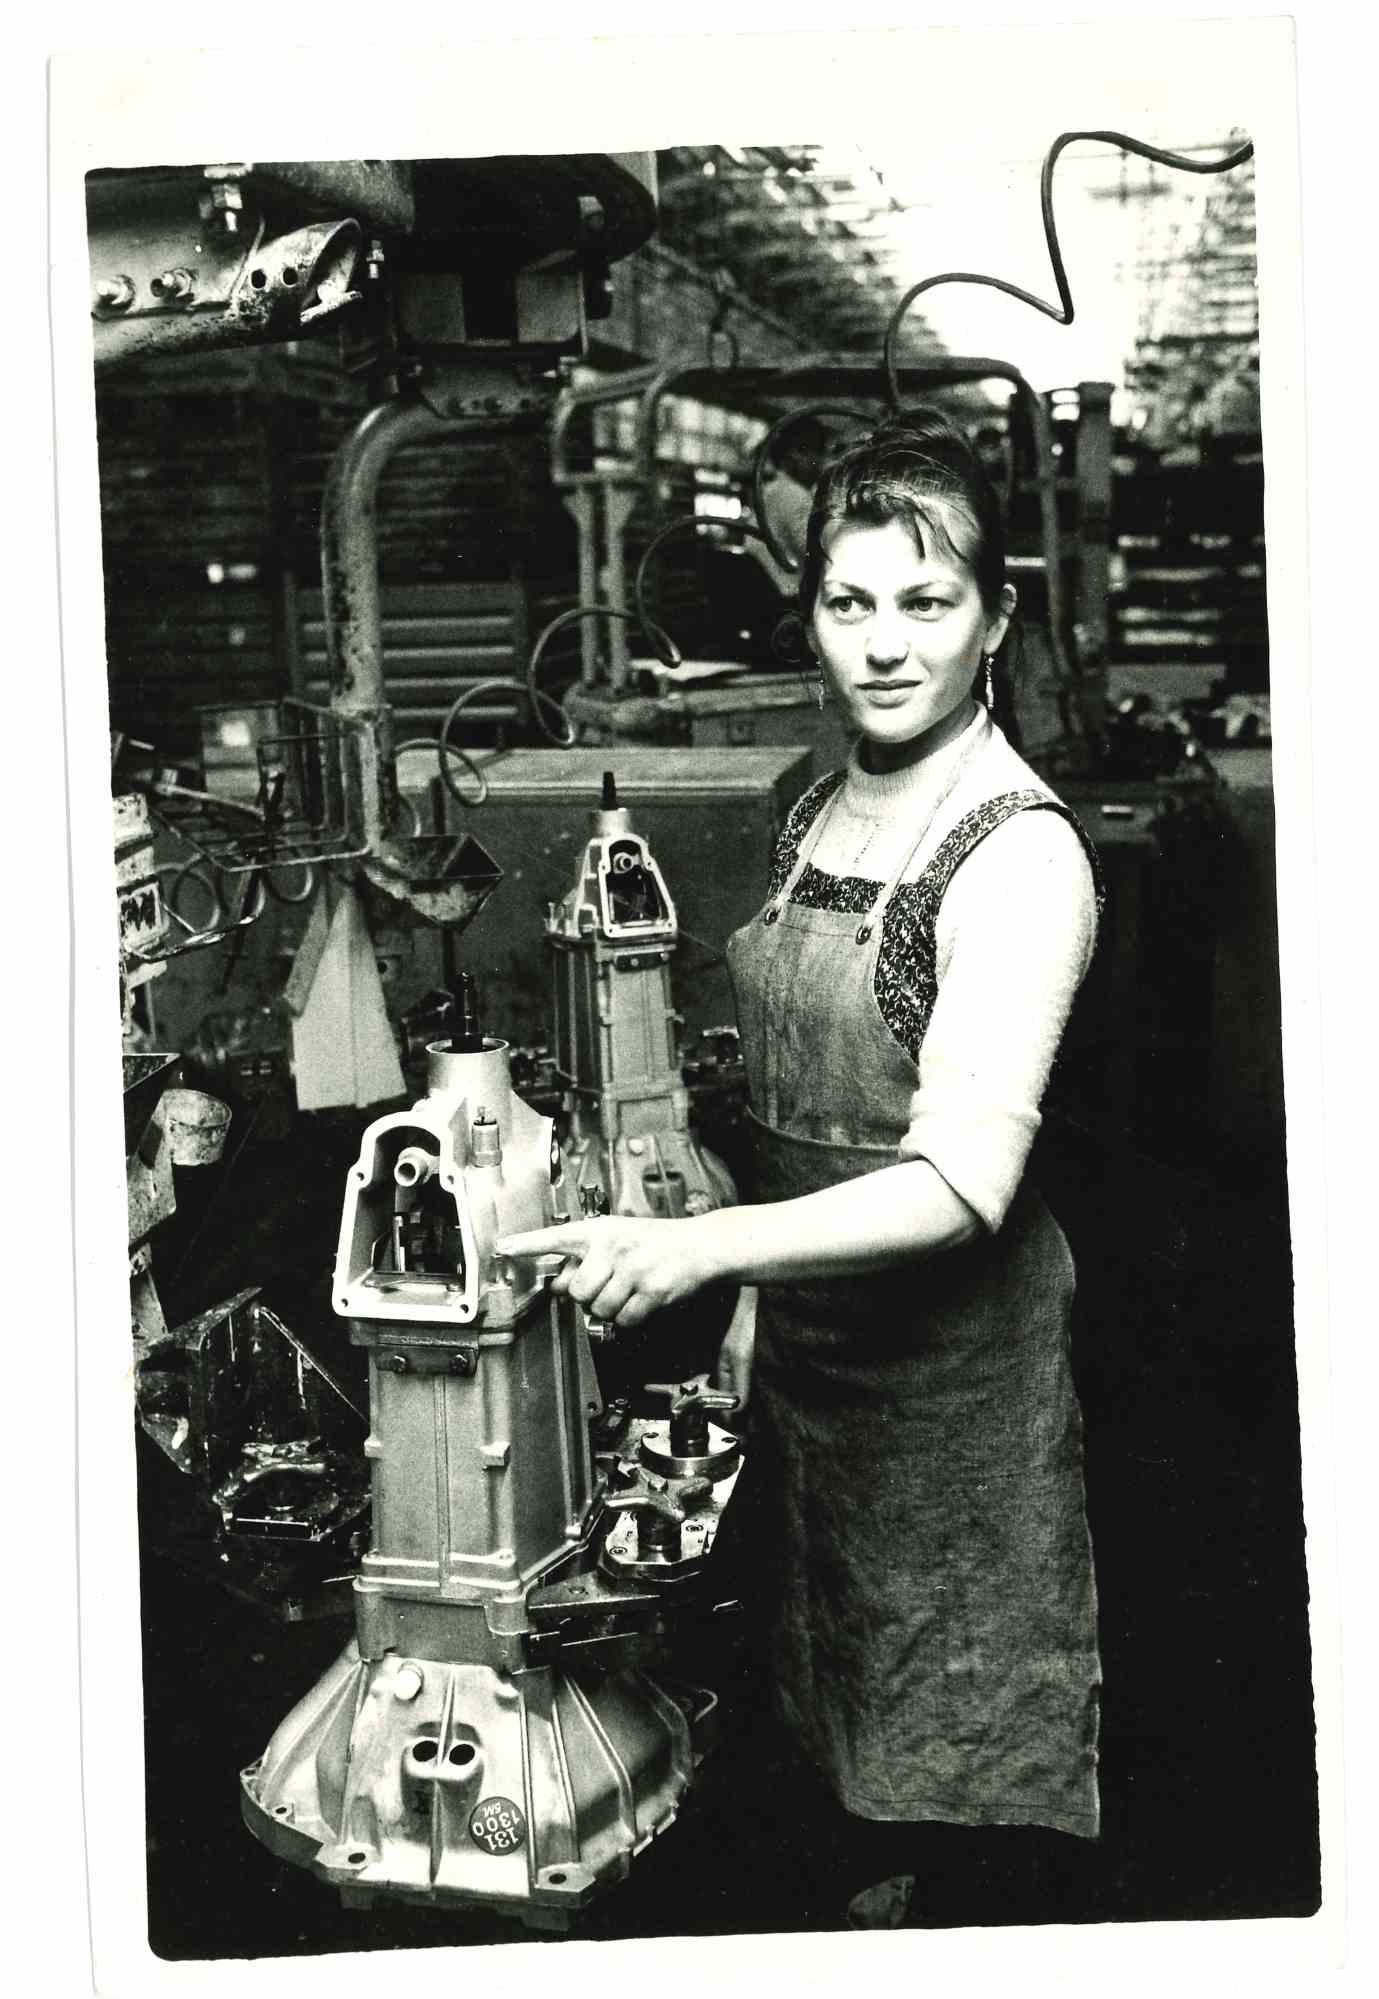 Unknown Portrait Photograph - Women at work - Historical Photos -1960s